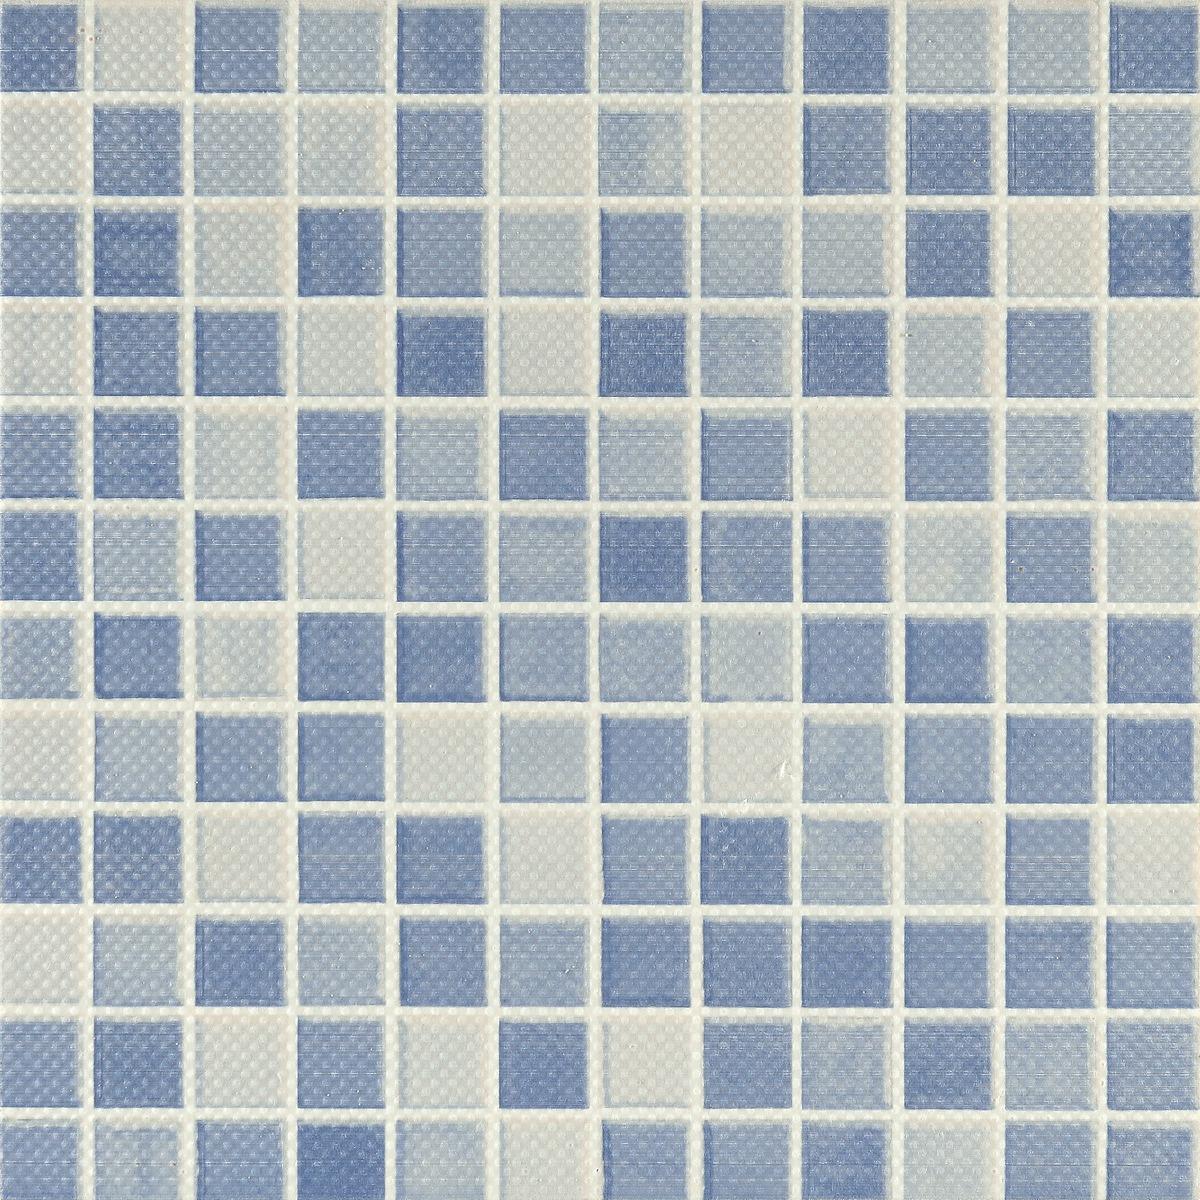 1x1 Tiles for Bathroom Tiles, Balcony Tiles, Hospital Tiles, Bar/Restaurant, Commercial/Office, Outdoor/Terrace